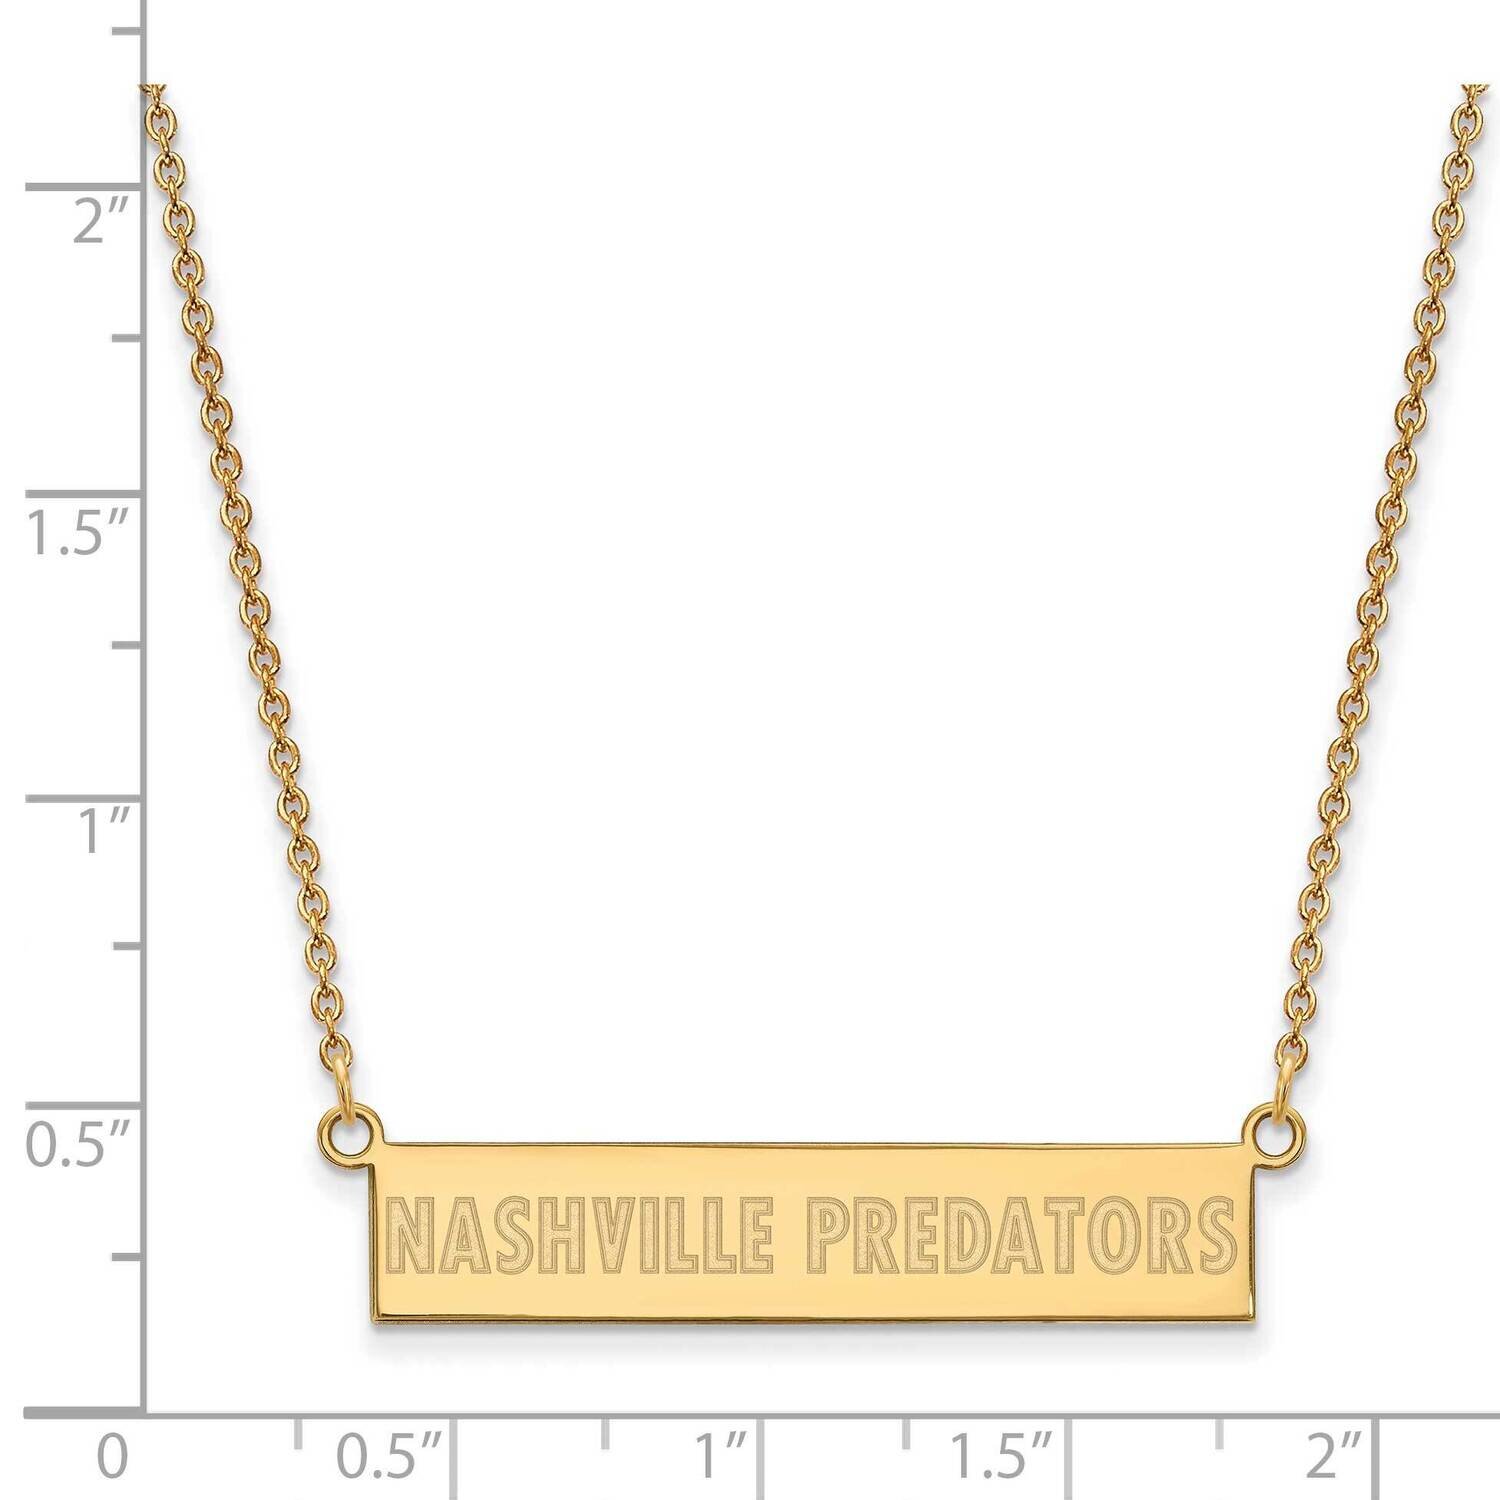 Nashville Predators Small Bar Necklace Gold-plated Sterling Silver GP015PRE-18